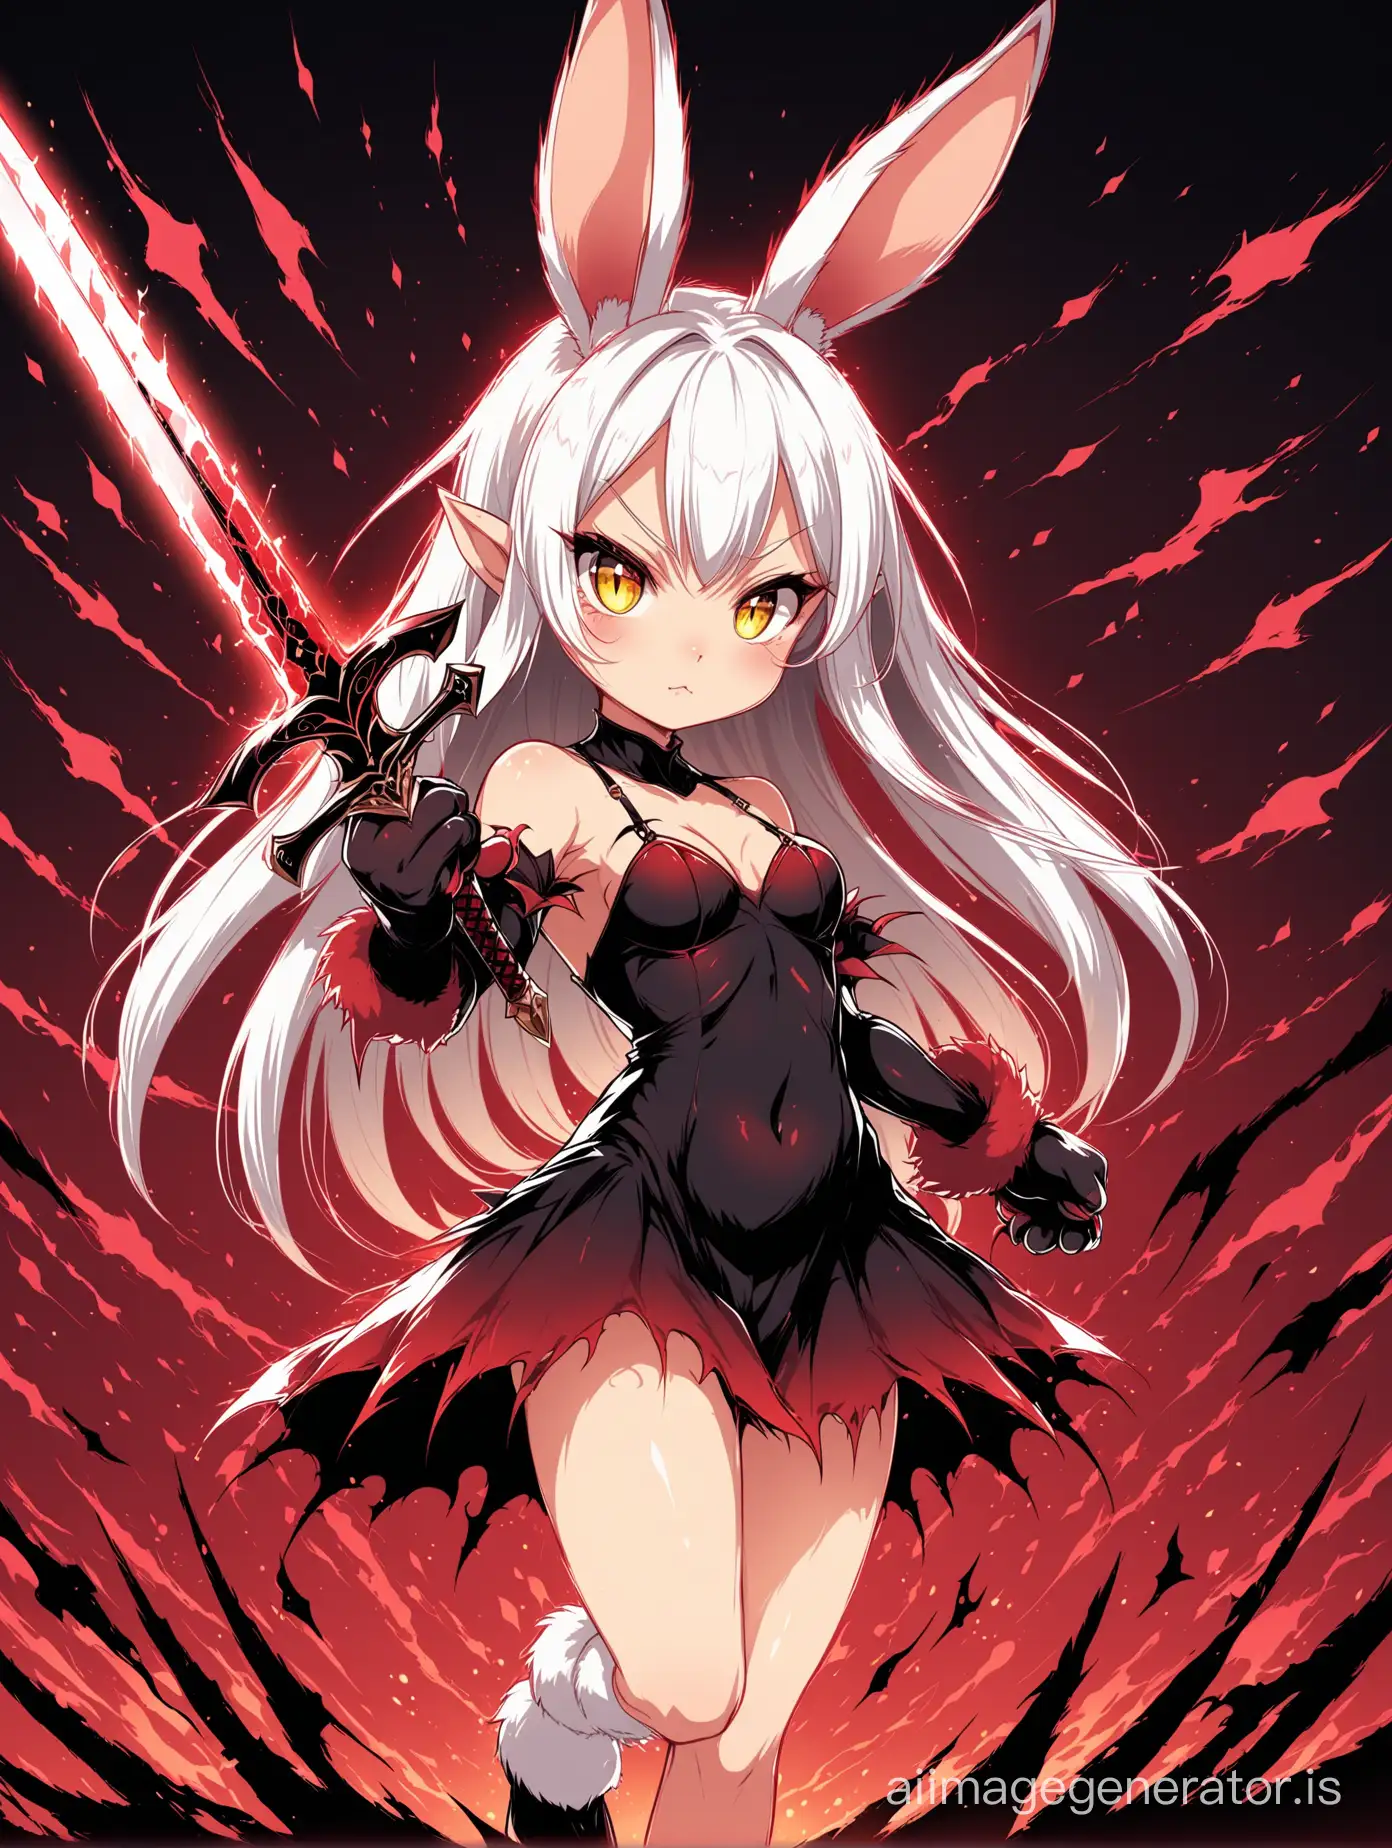 Fantasy-Illustration-Demonic-Rabbit-Girl-with-Sword-in-Paw